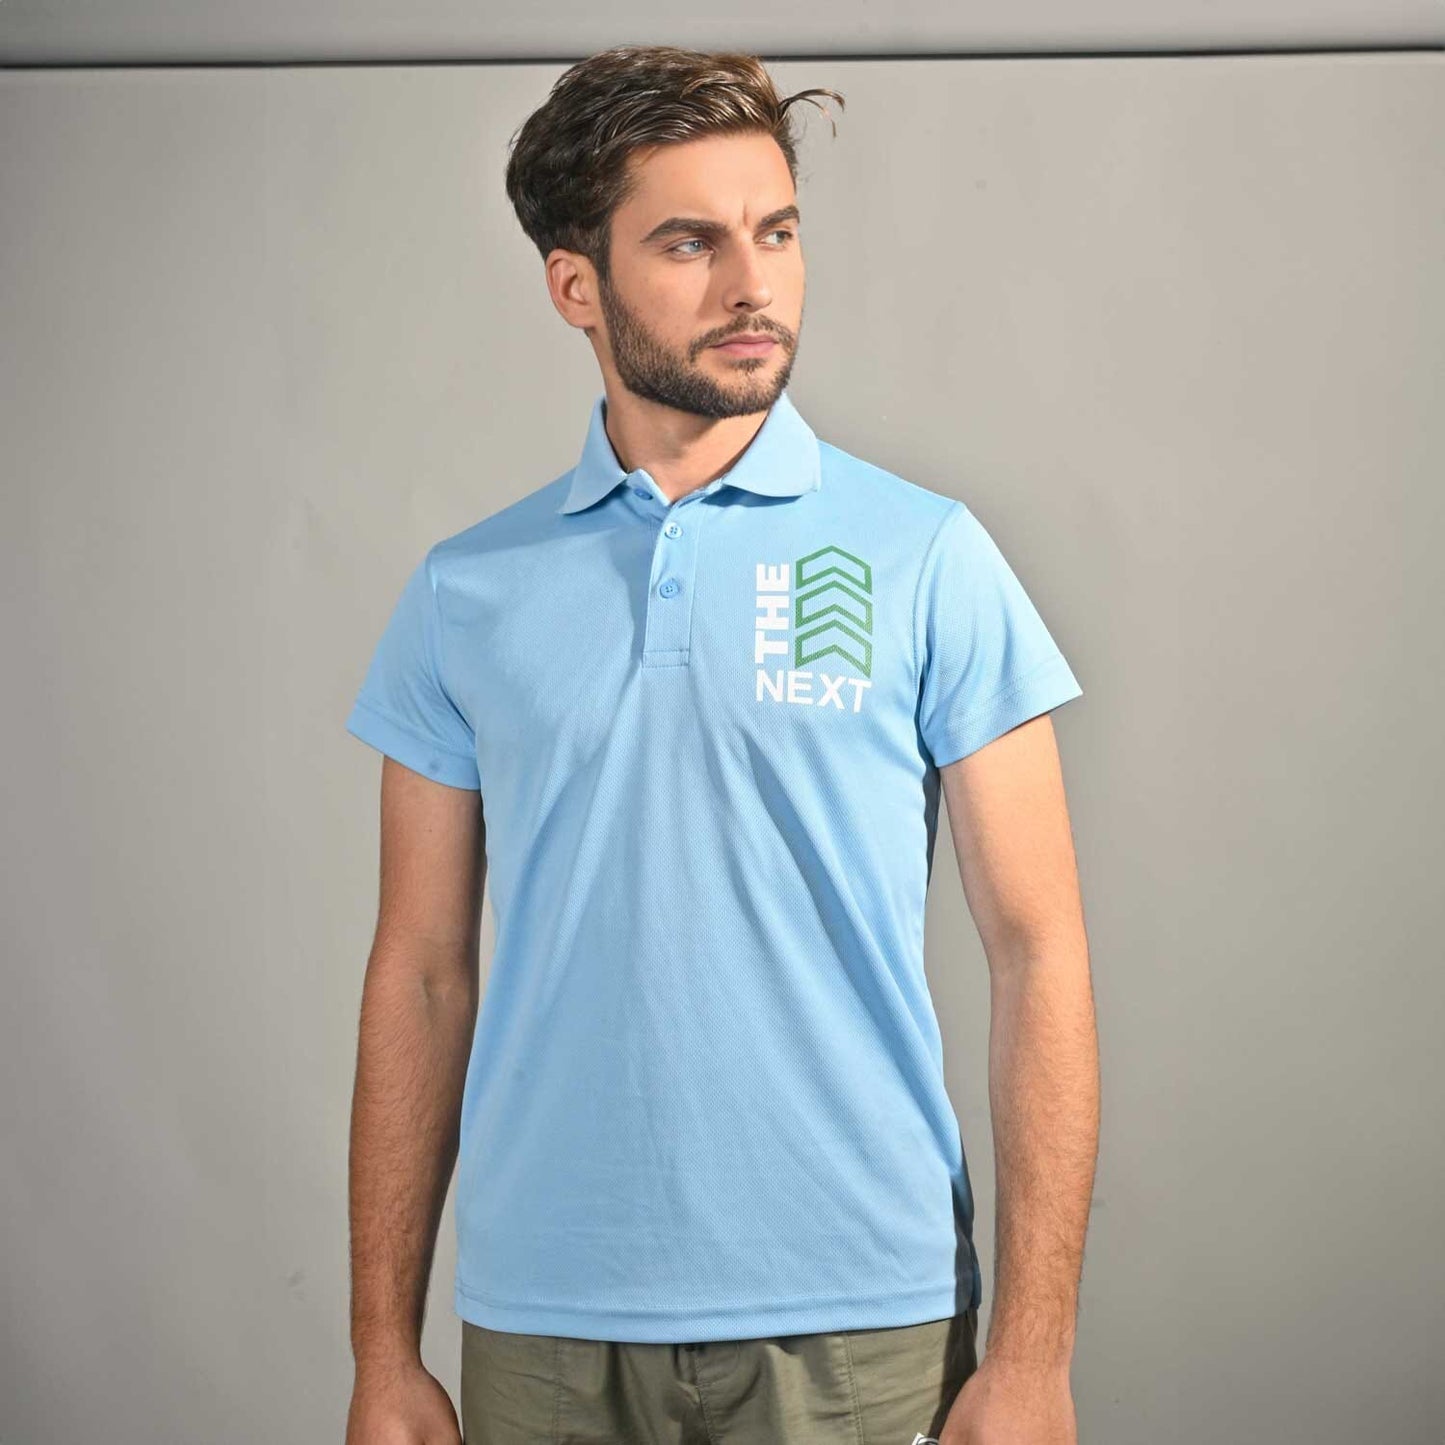 Polo Republica Men's The Next Printed Activewear Polo Shirt Men's Polo Shirt Polo Republica Sky S 